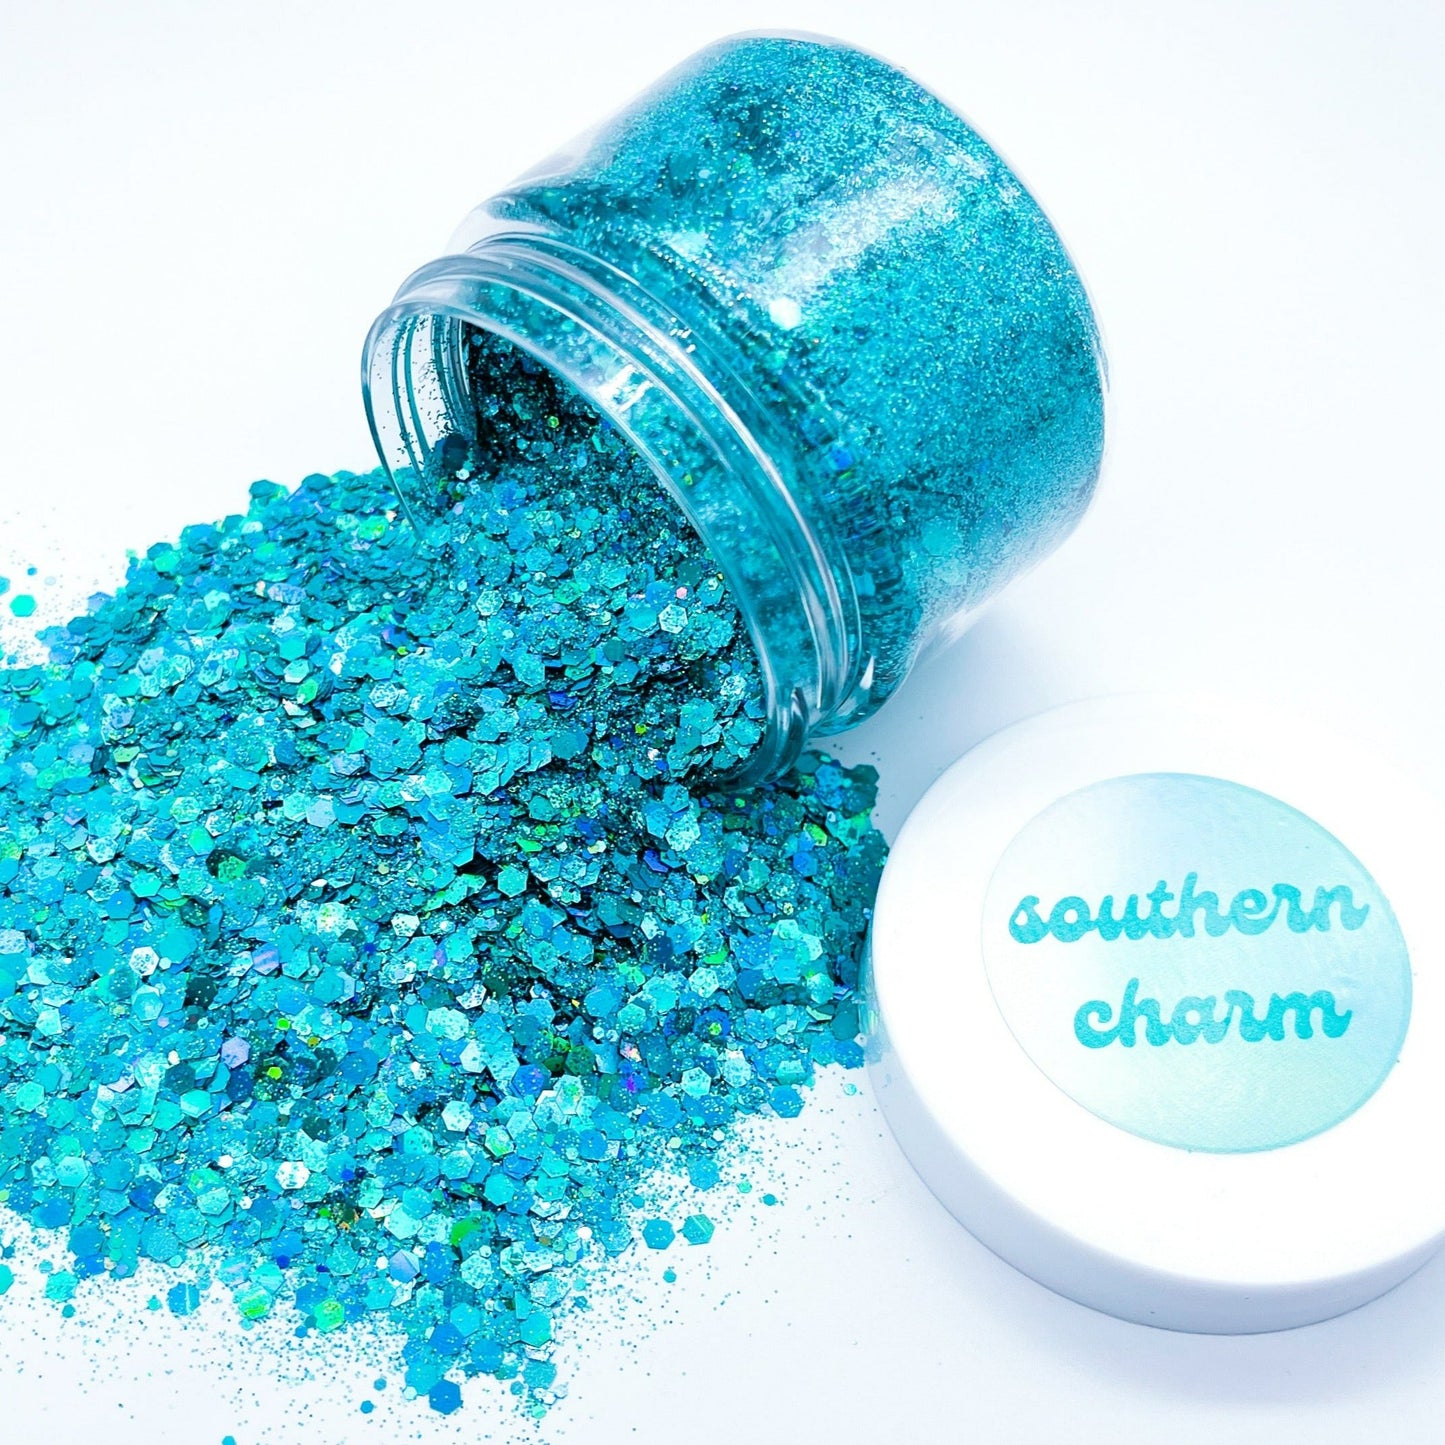 'Southern Charm' Chunky Glitter